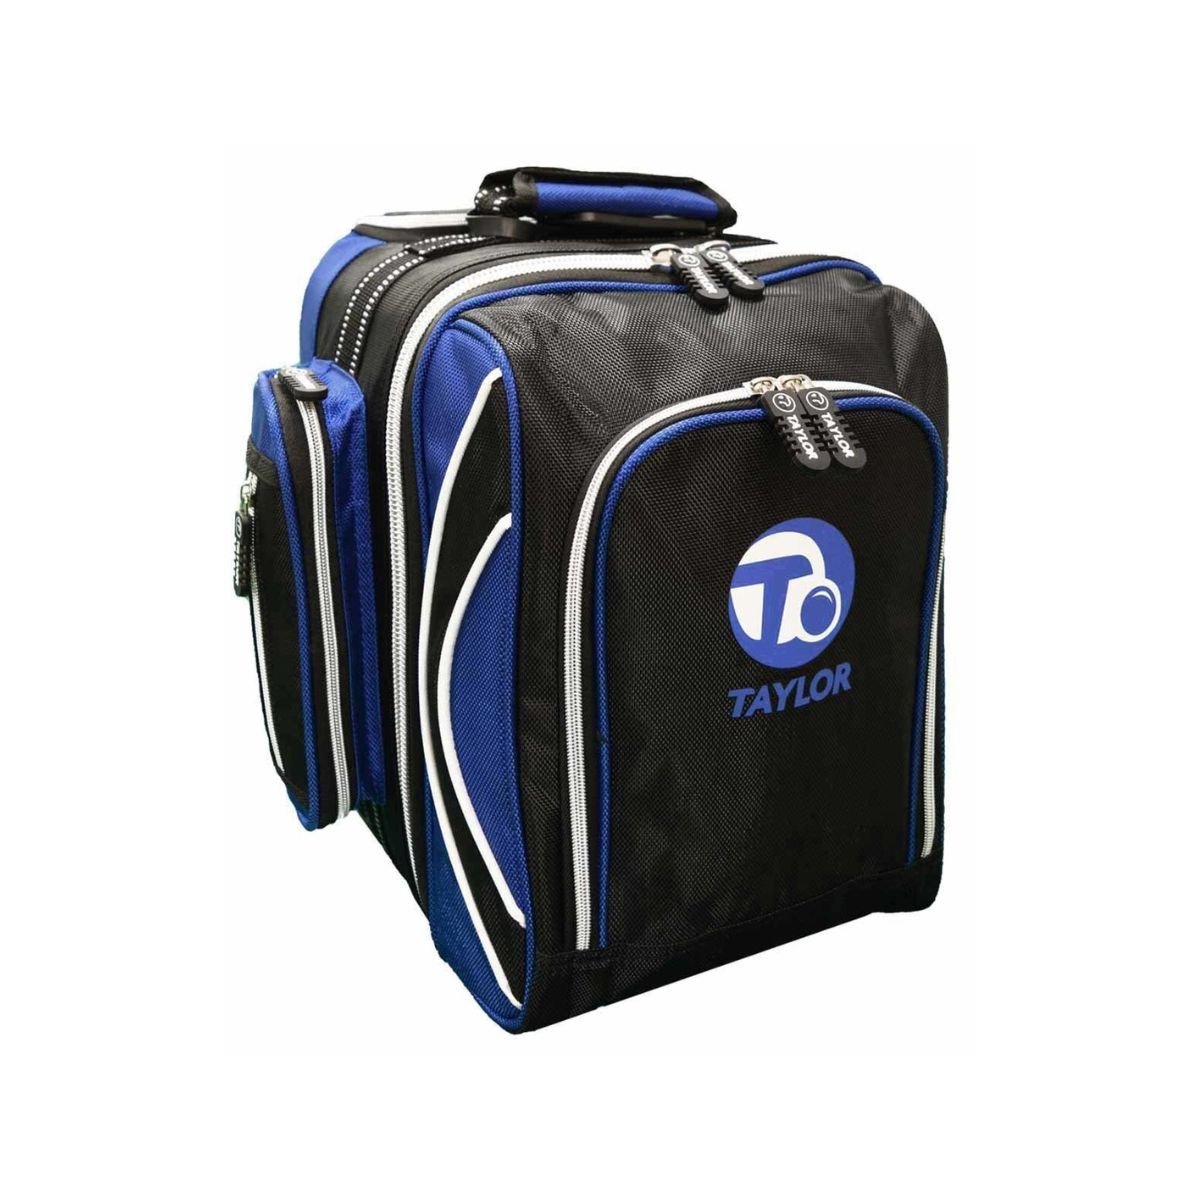 Taylor Bowls Compact Trolley Bag | Jack and Bowl